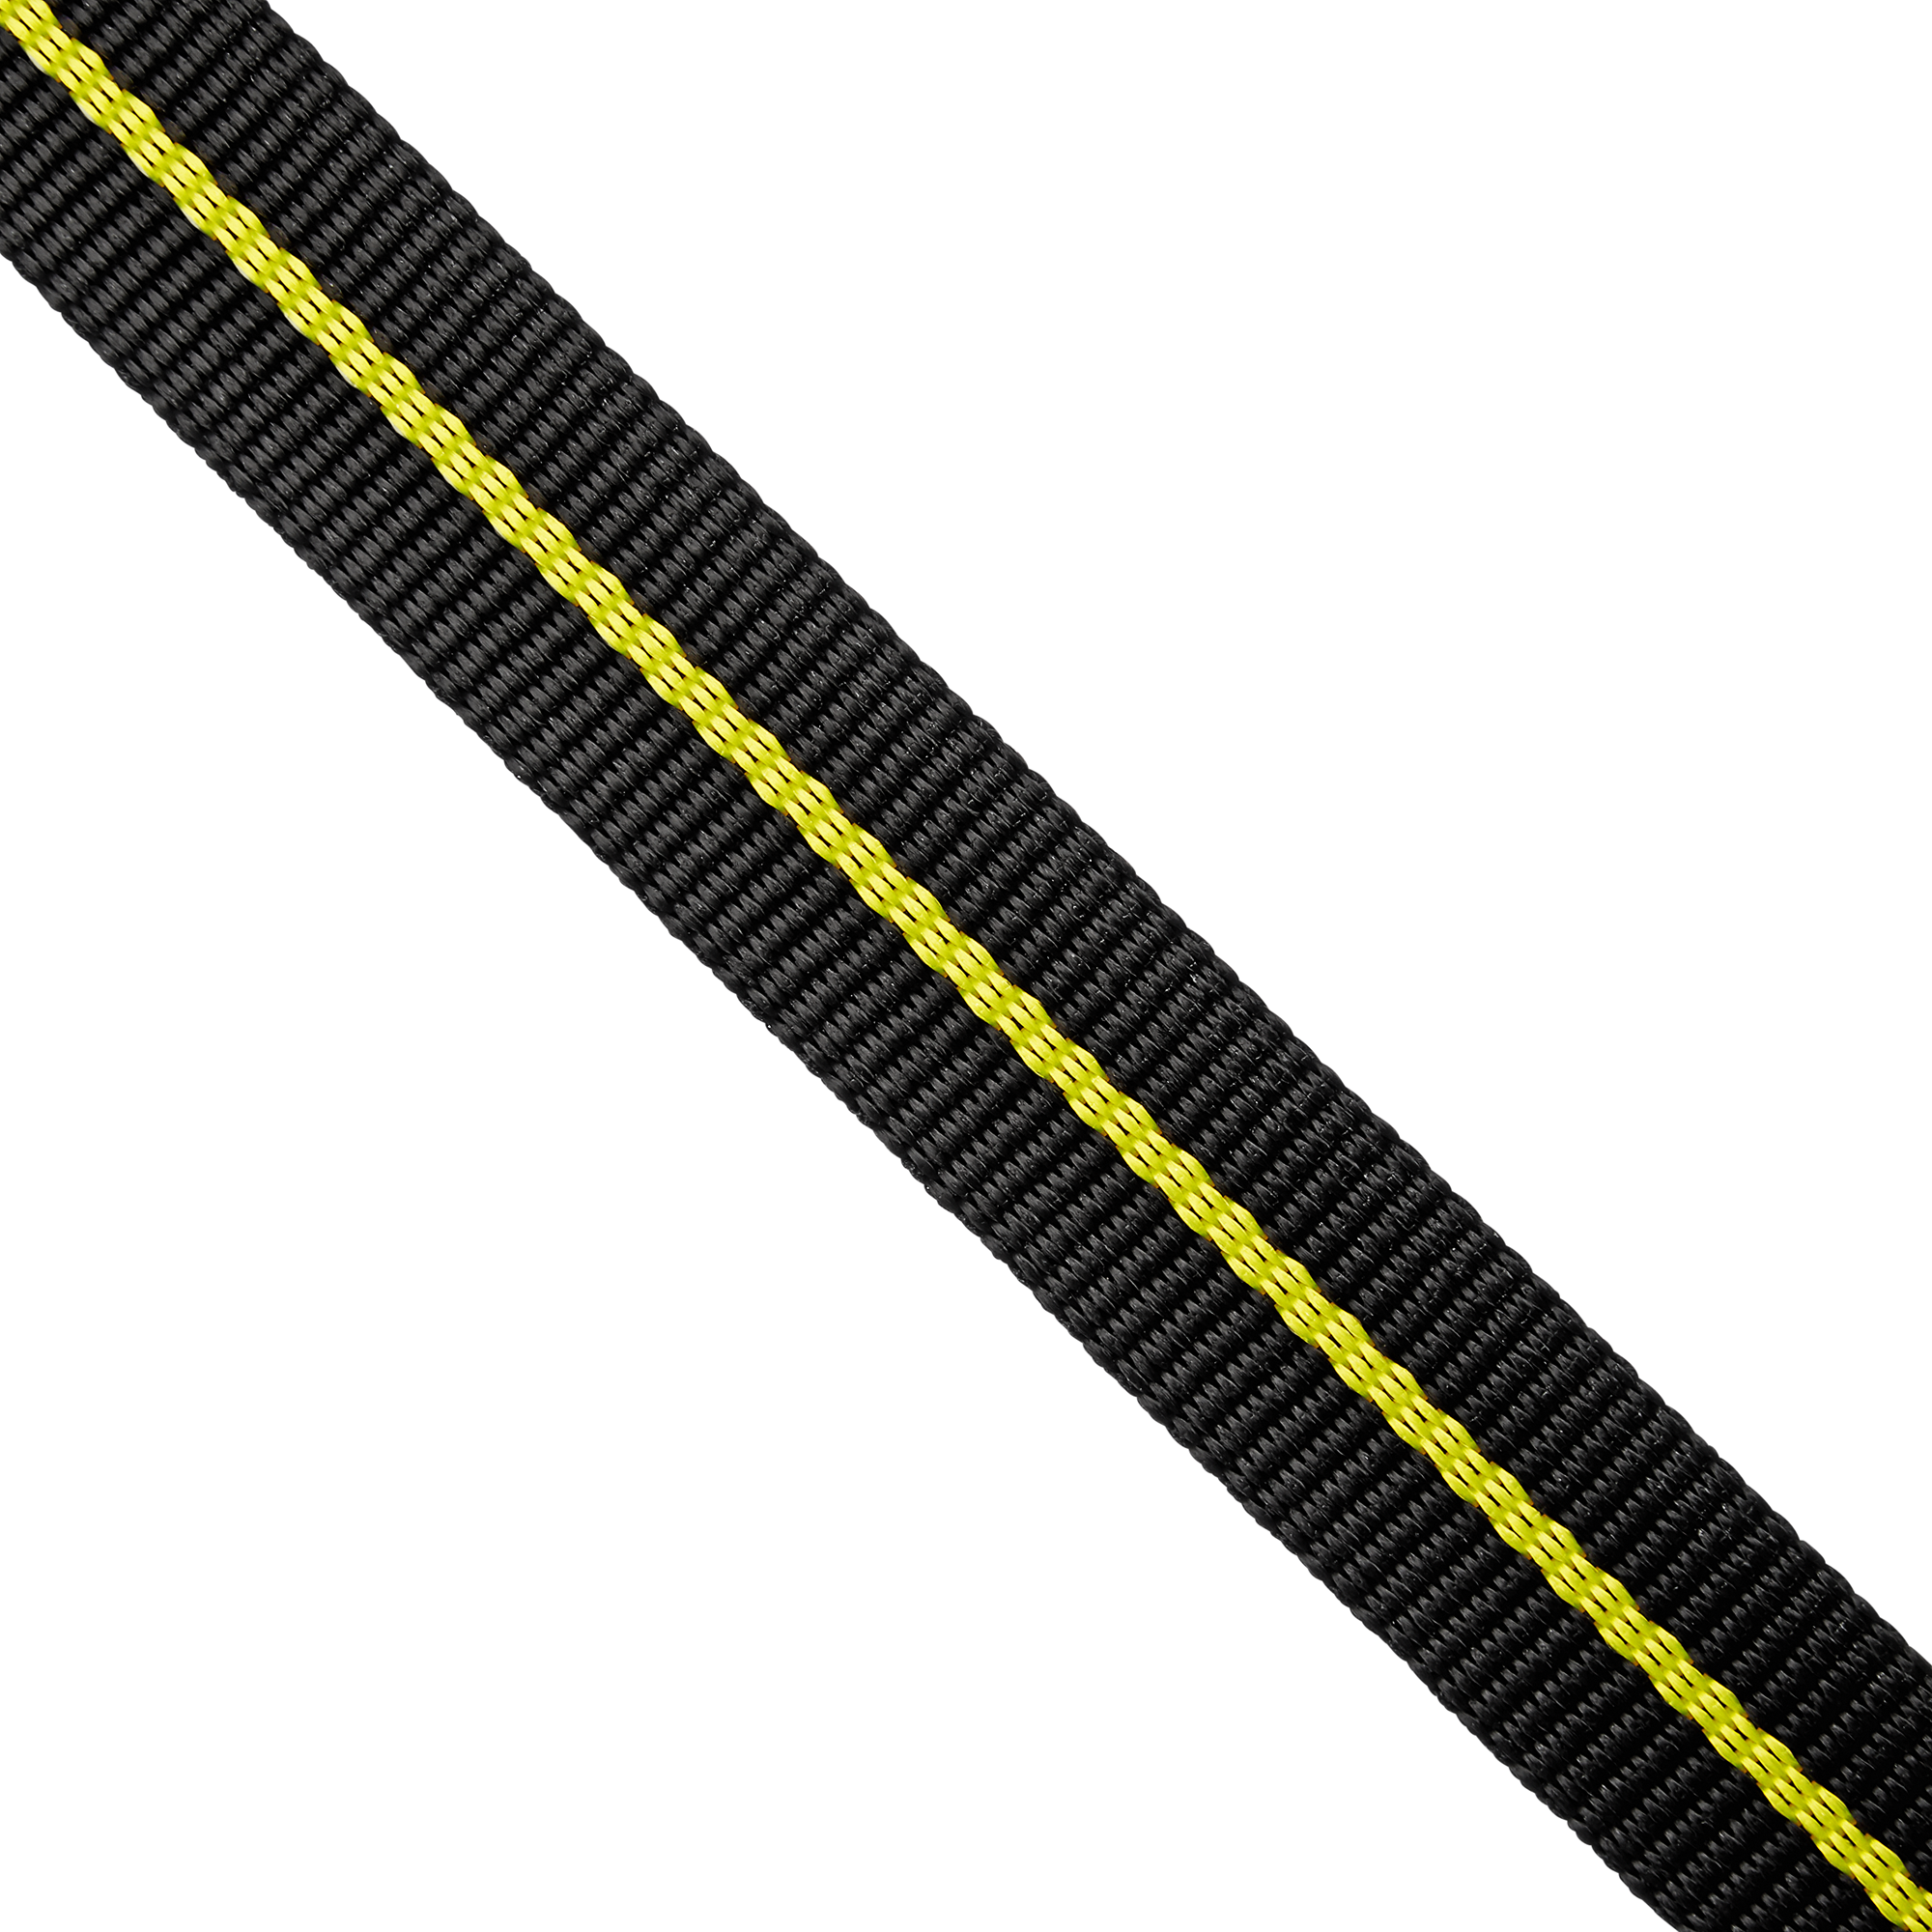 Gurtband schwarz/gelb Meterware 2,5 cm + product picture